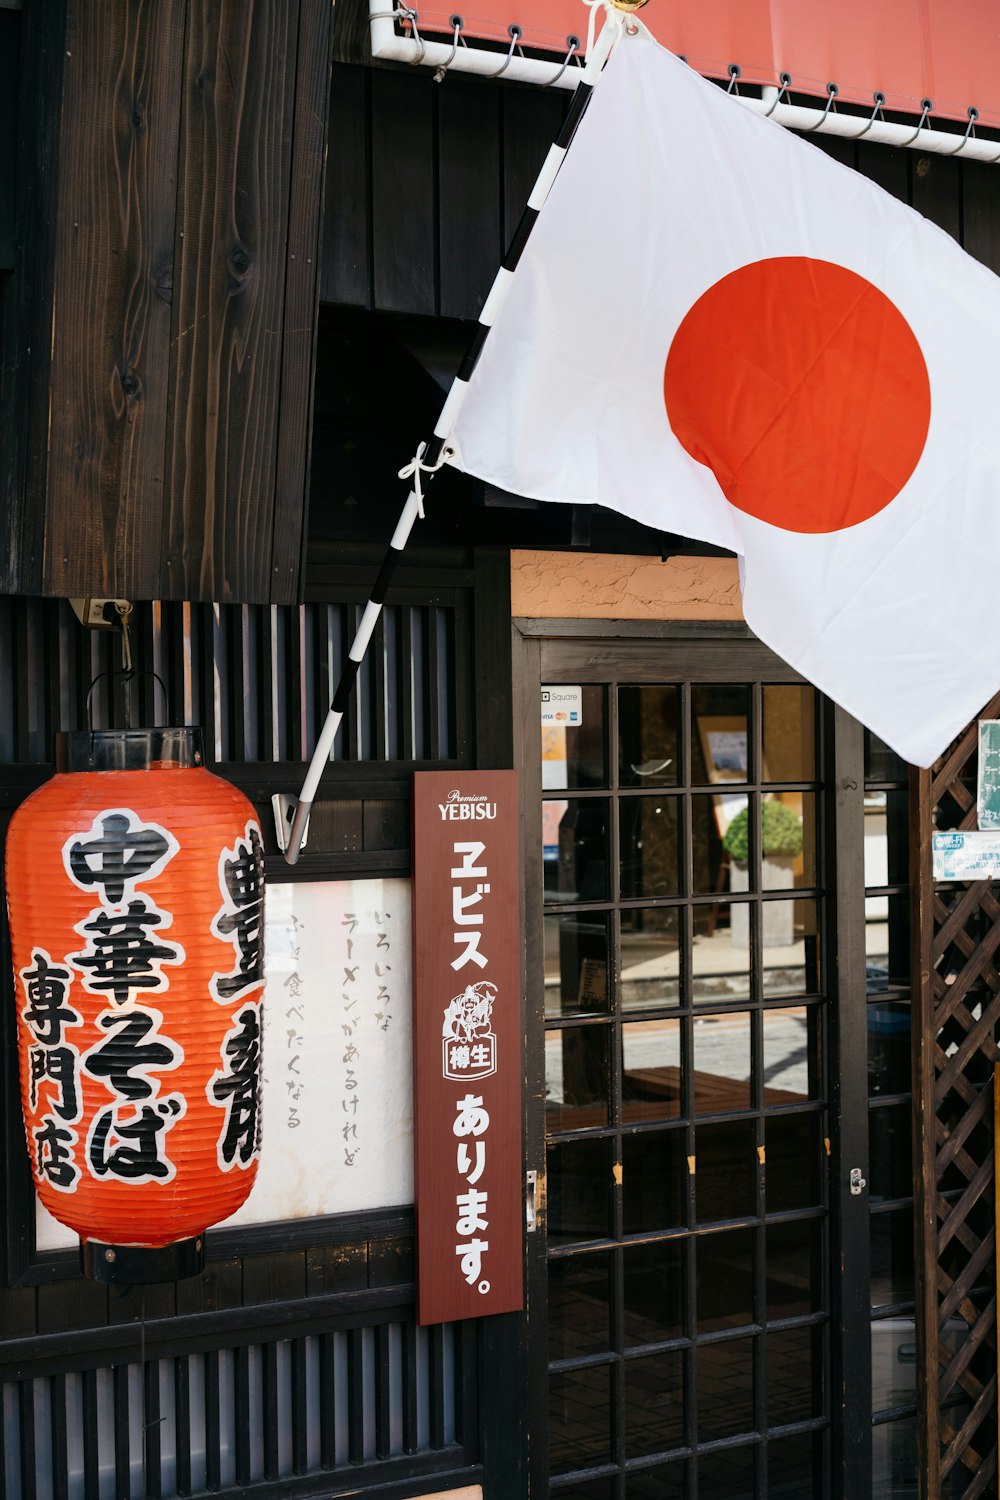 Japanese Flag Pictures Download Free Images On Unsplash